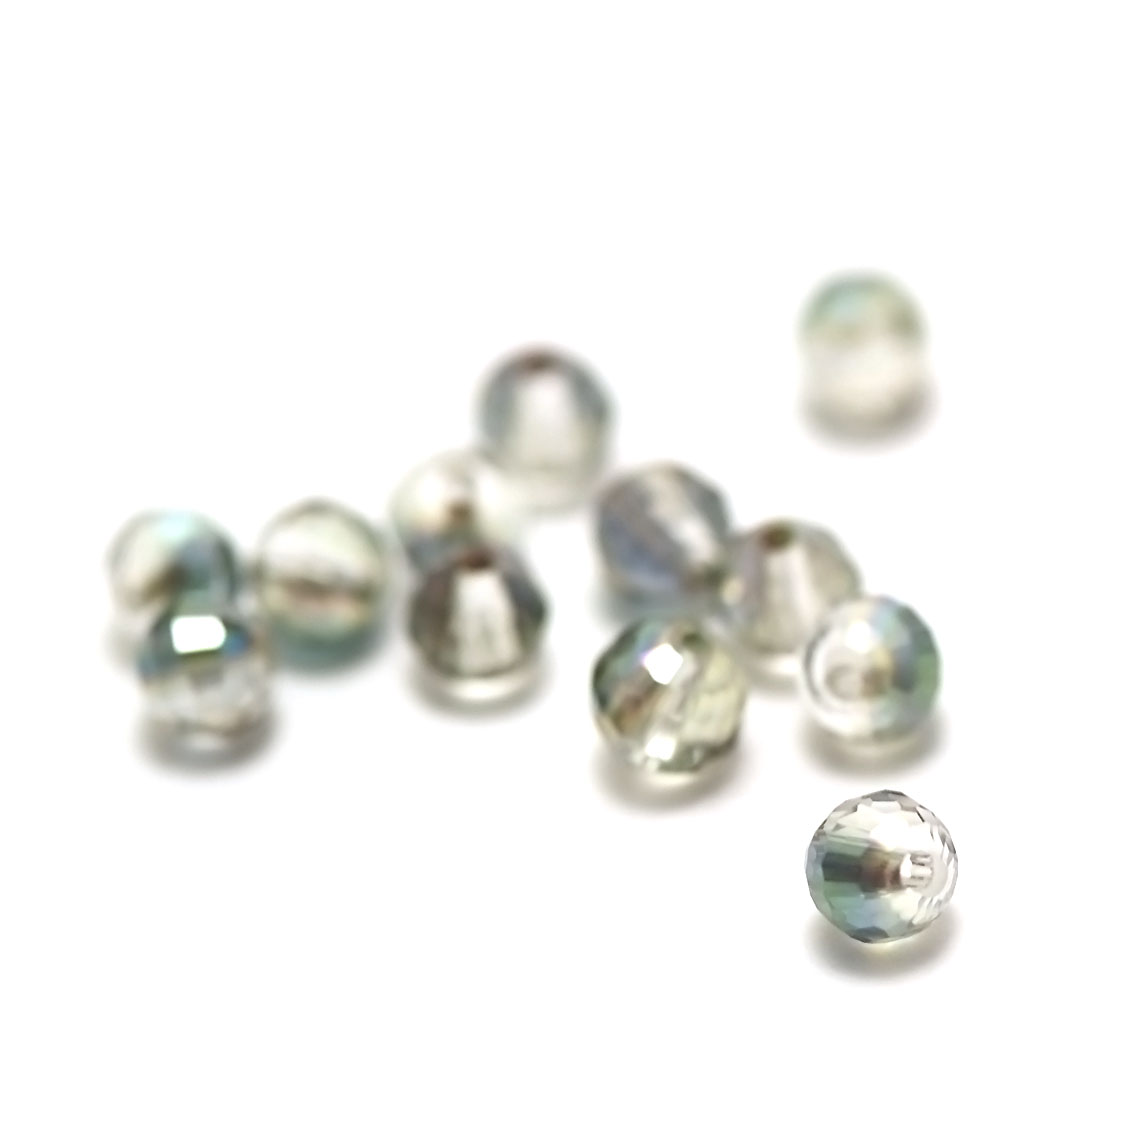 20 perles cristal ronde facettée 6 mm, transparent irisé vert